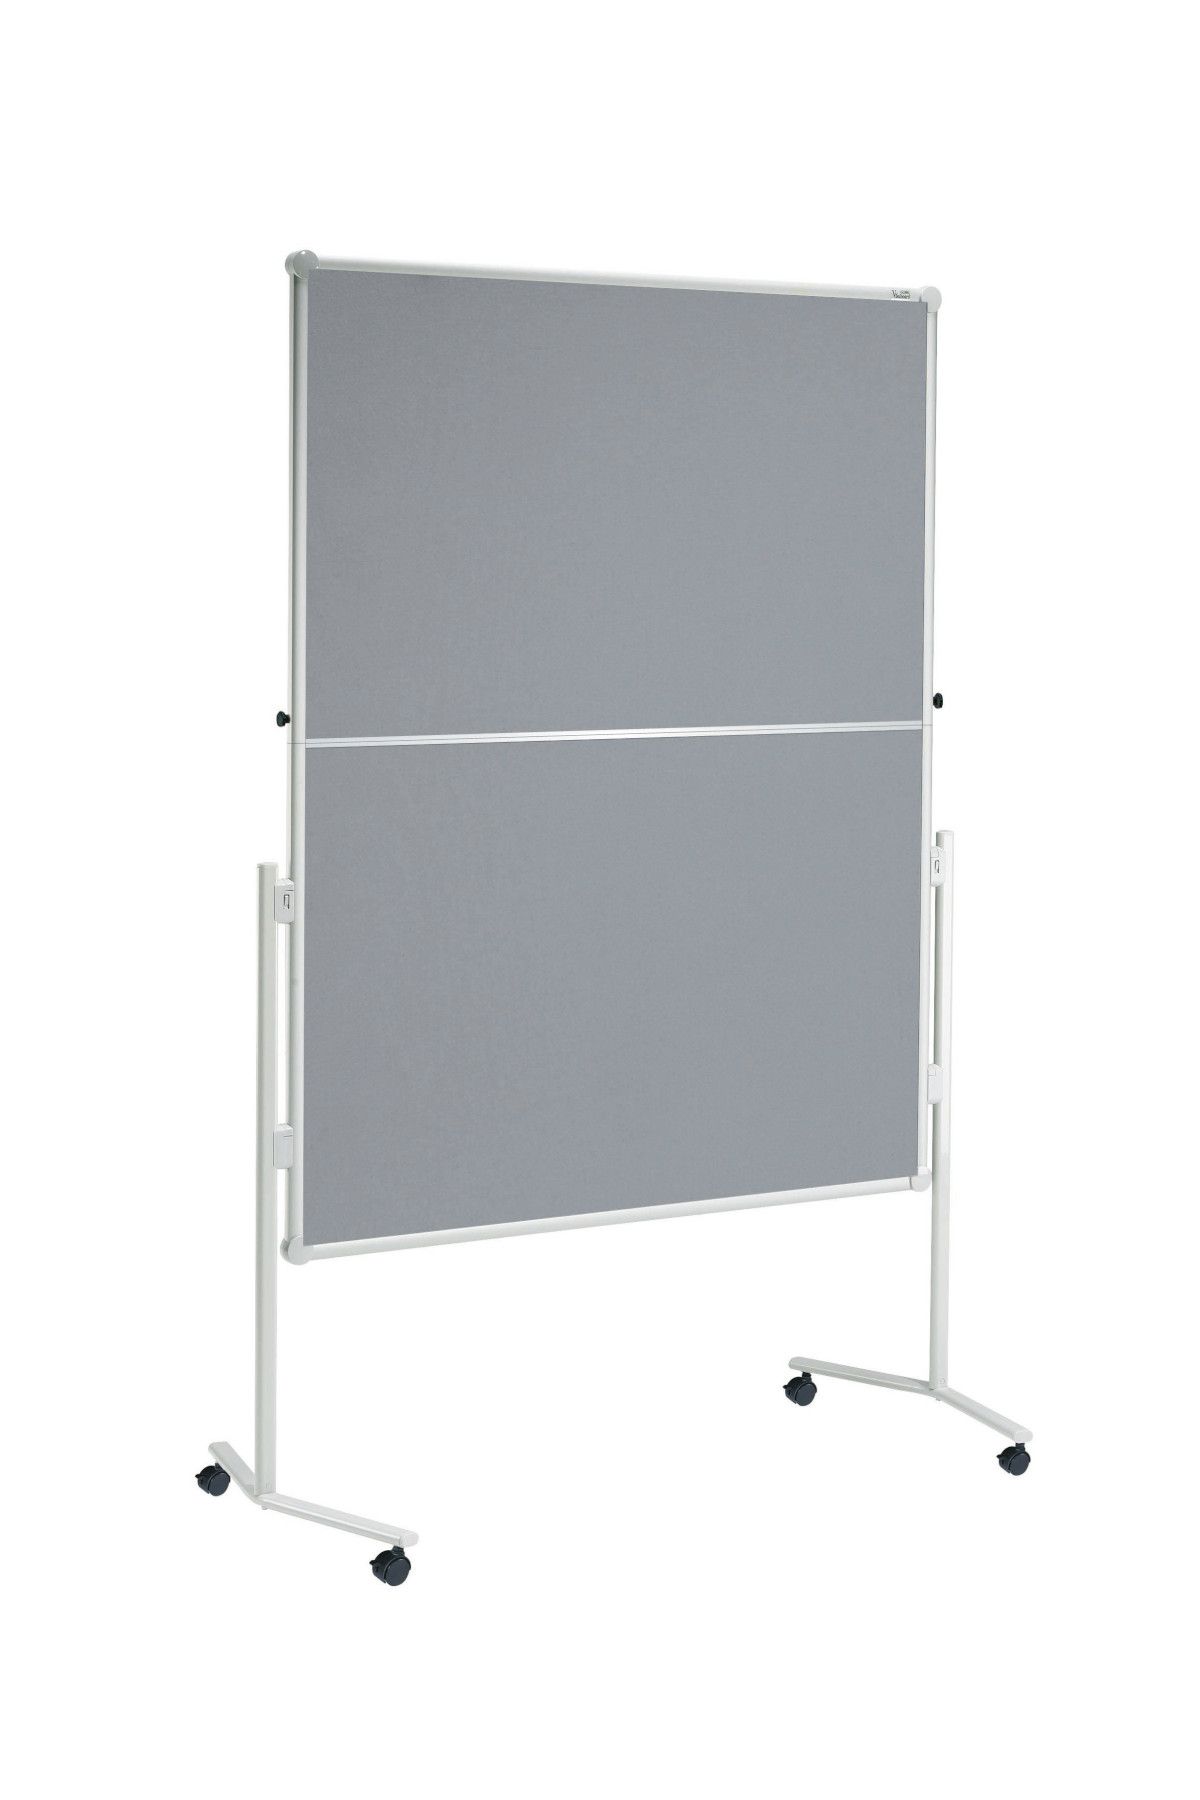 Moderationstafel MAULpro klappbar Textil grau,  150x120 cm 